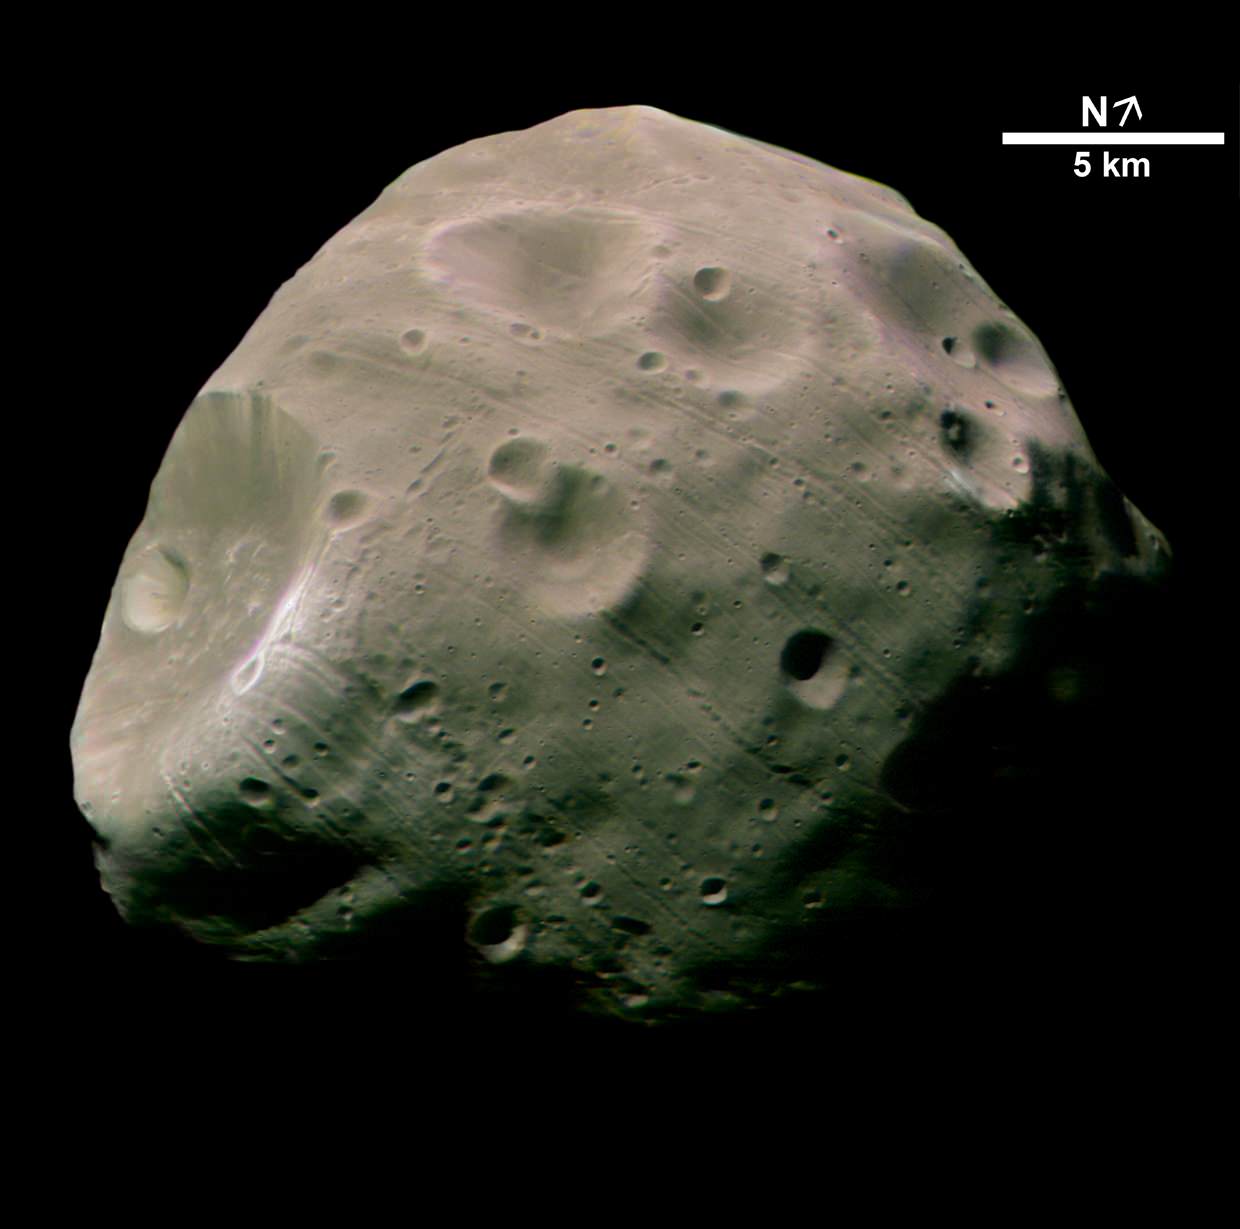 Phobos in Detail